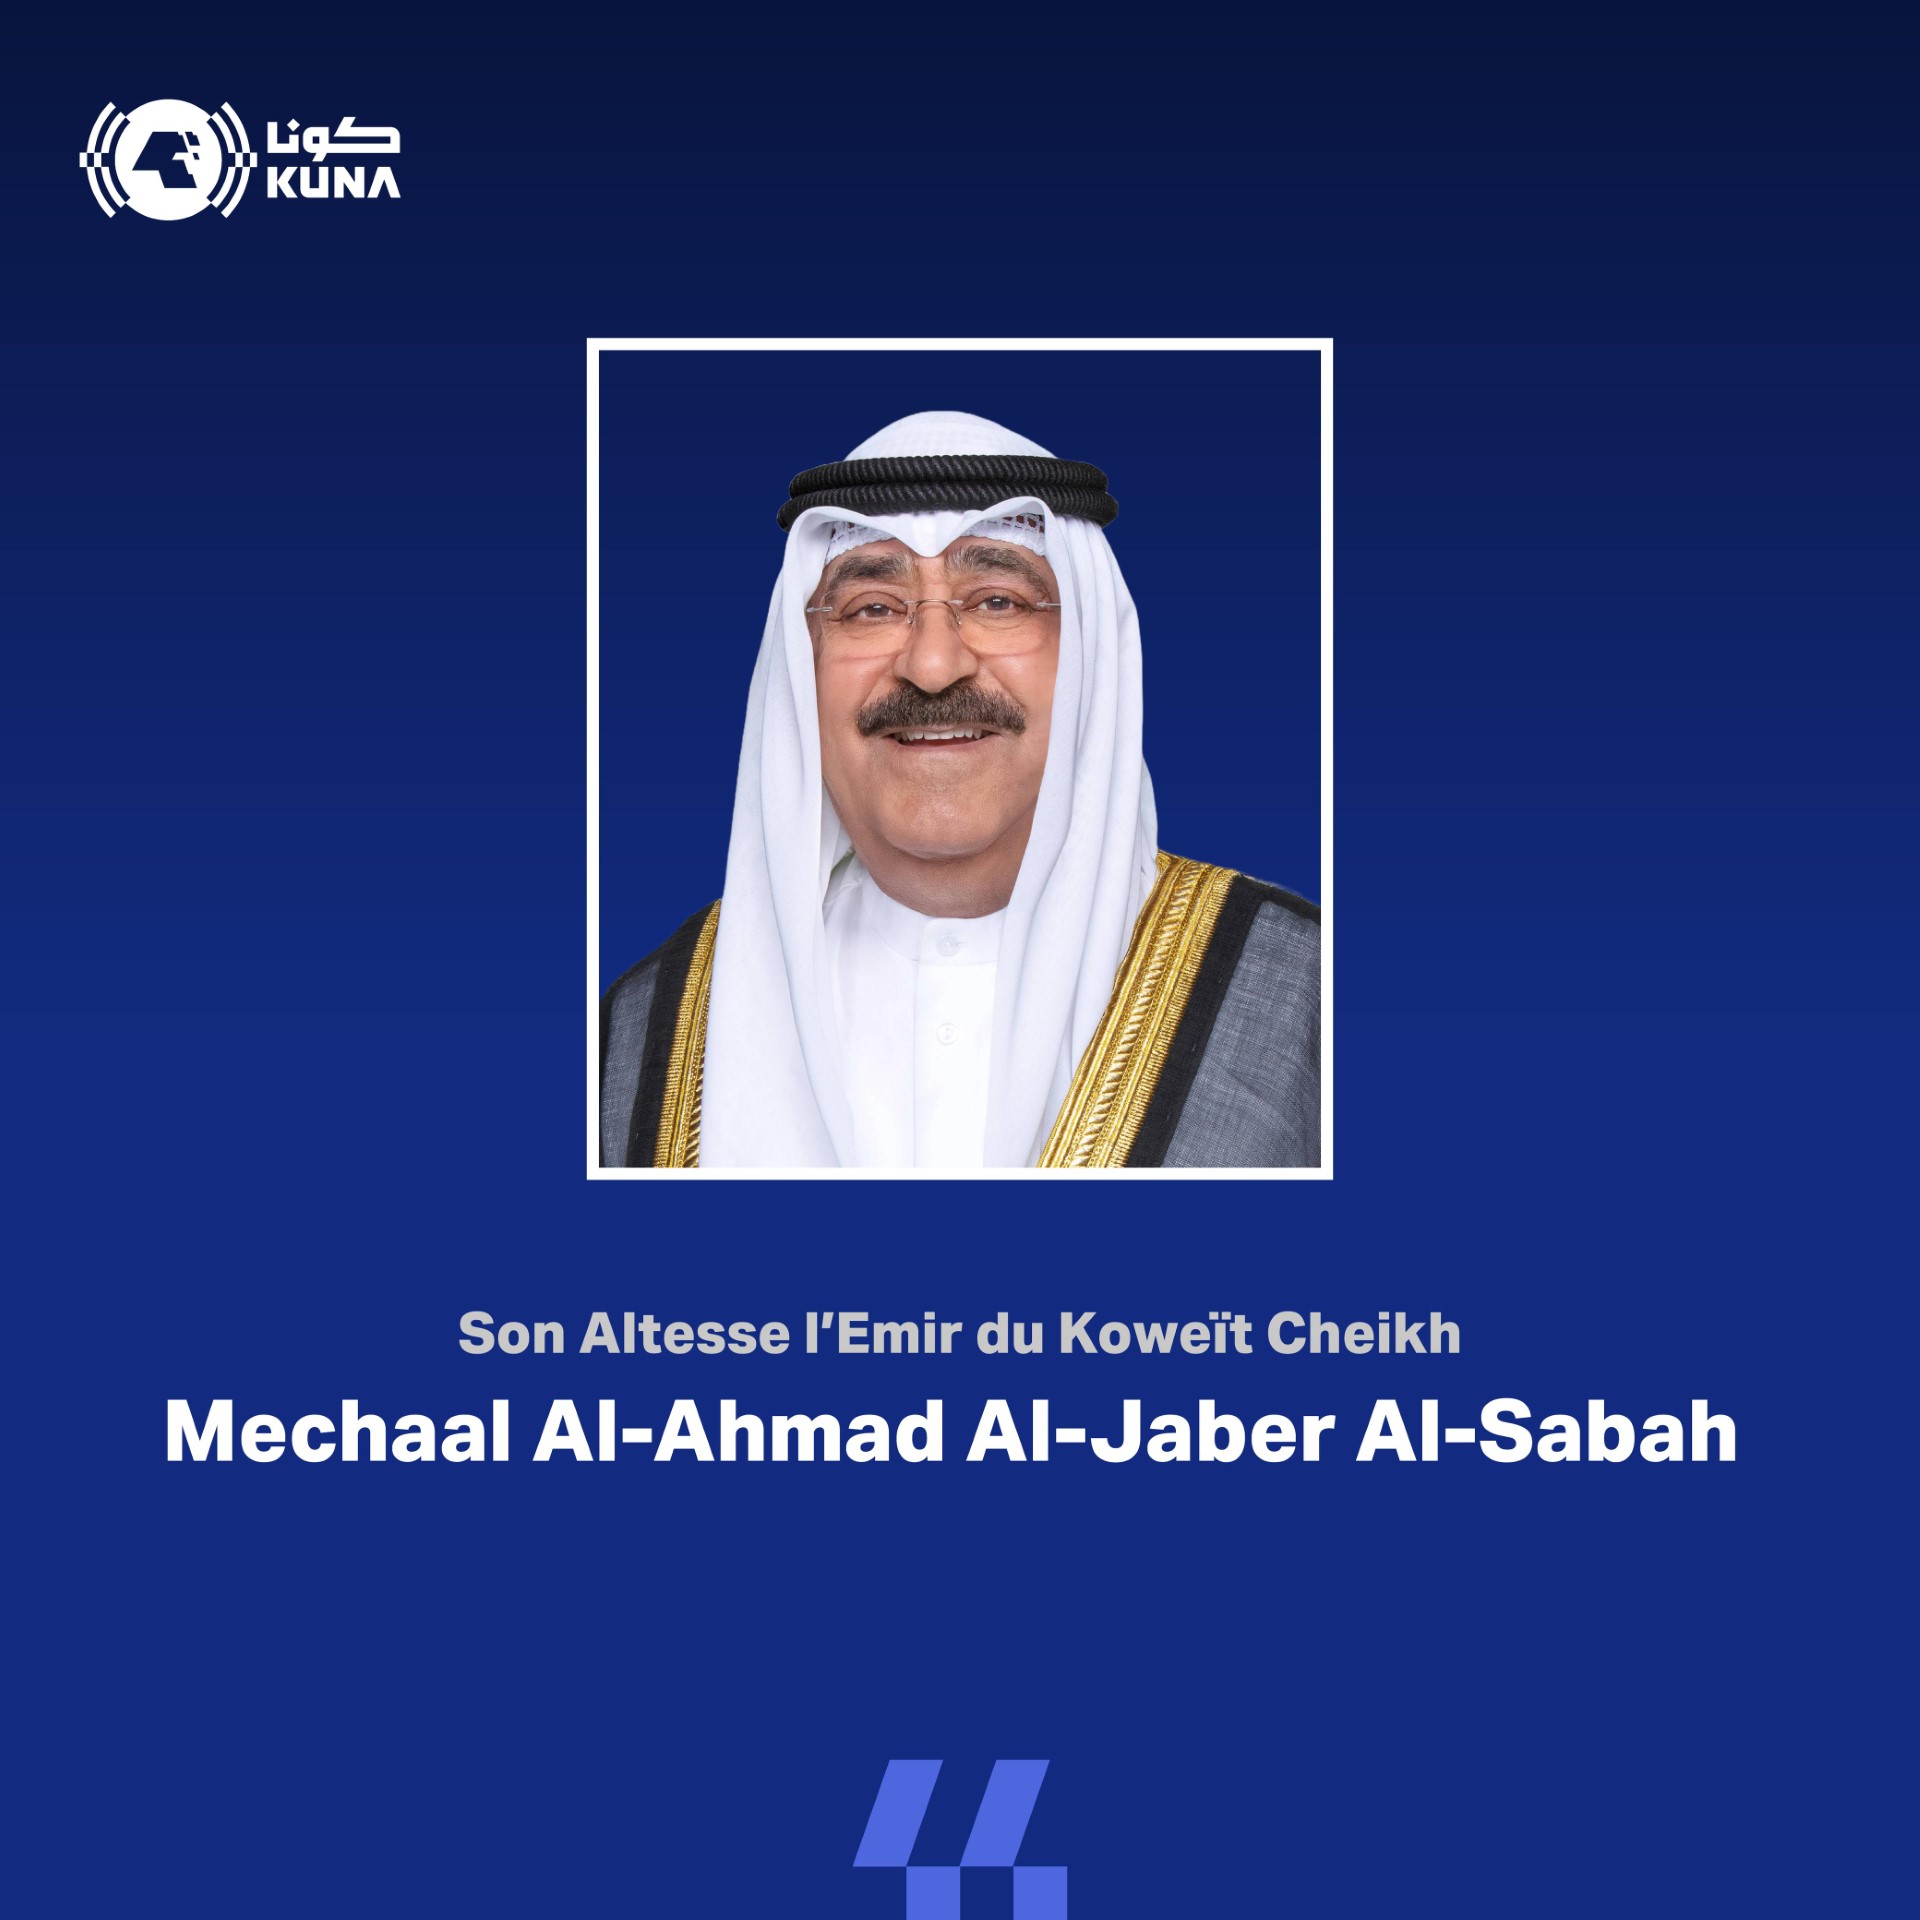 Son Altesse l’Emir du Koweït, Cheikh Mechaal Al-Ahmad Al-Jaber Al-Sabah